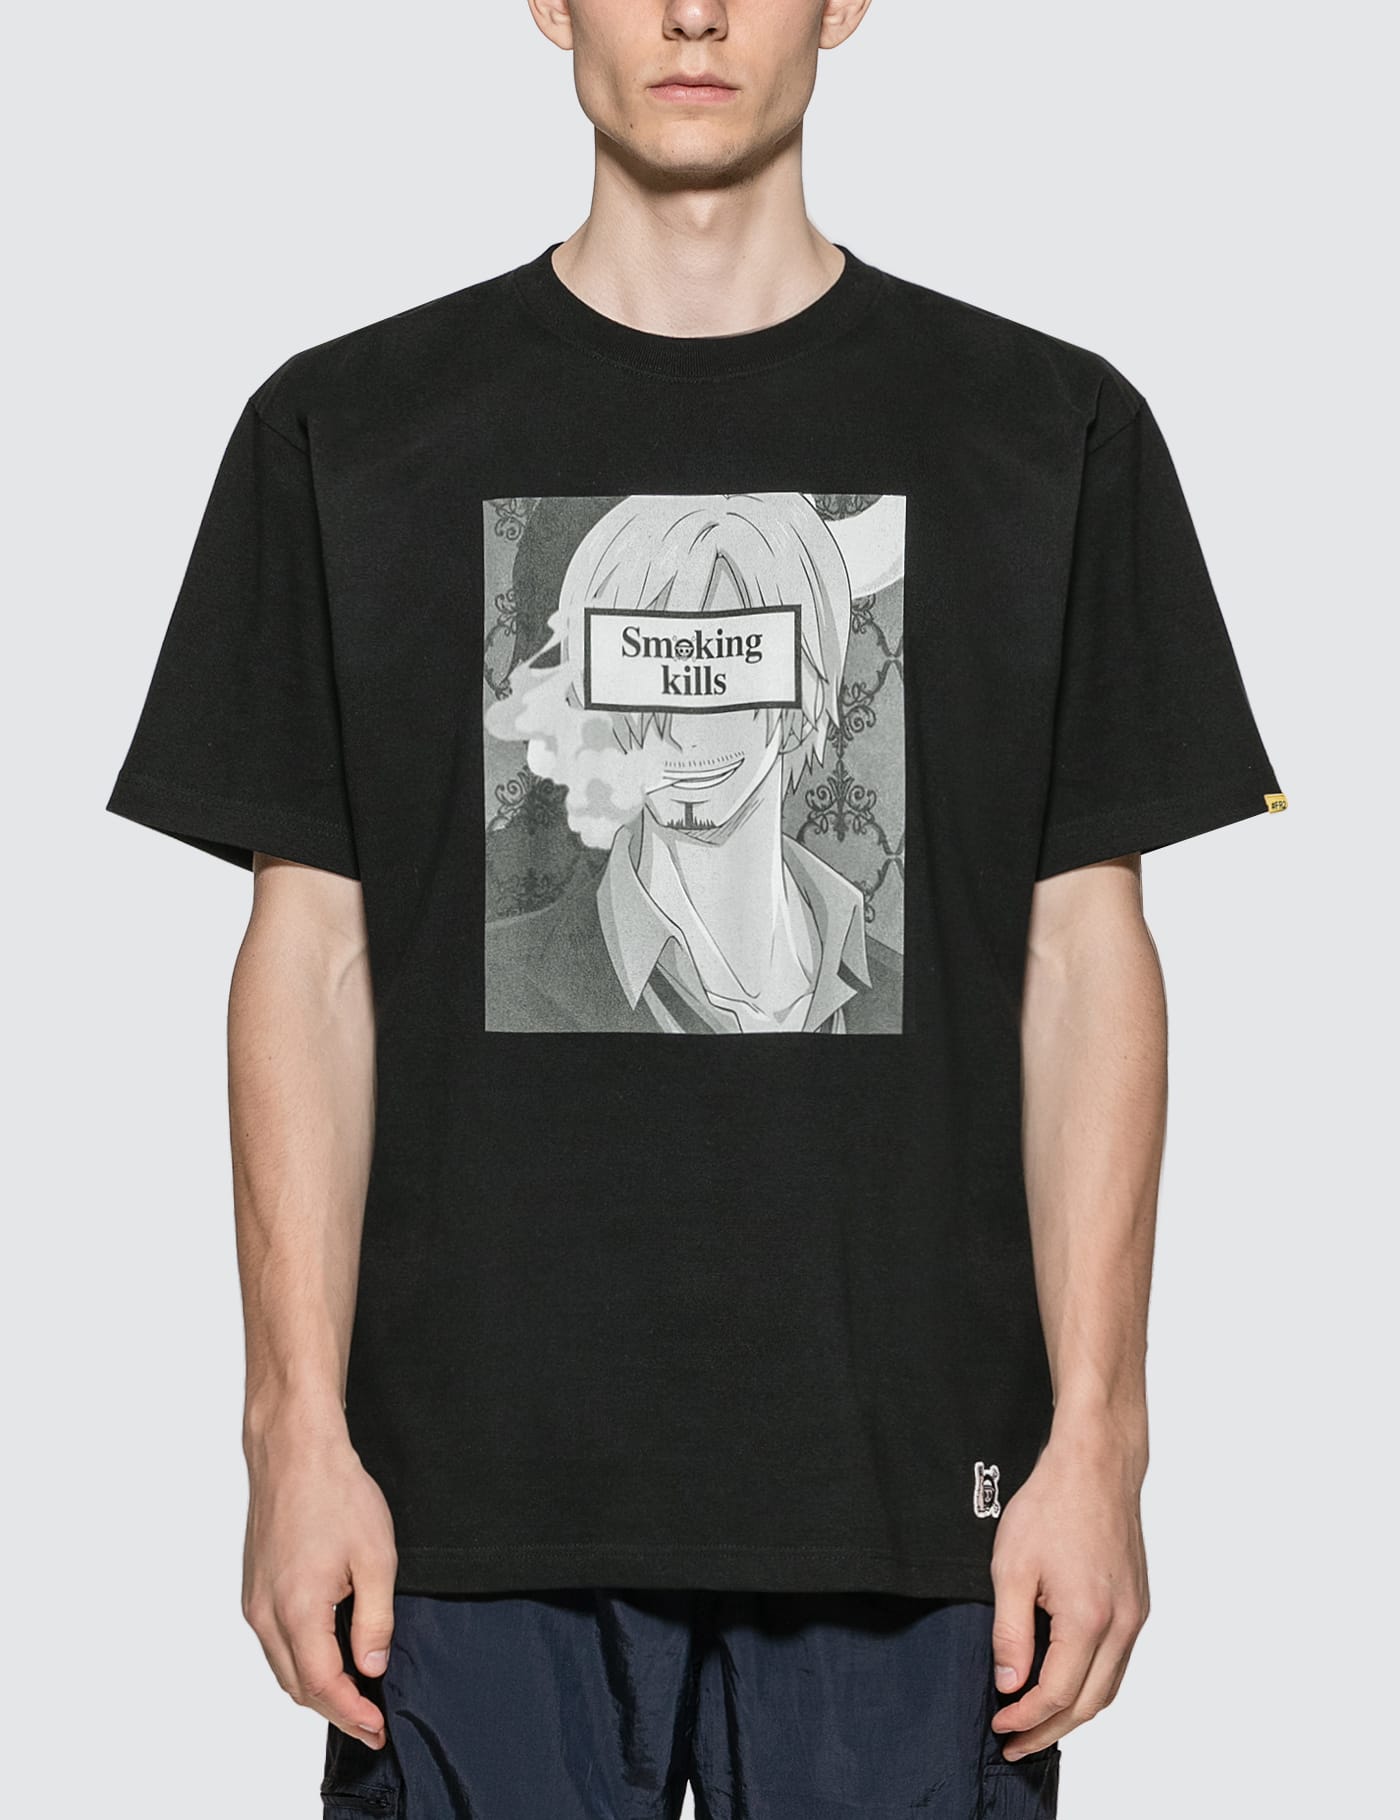 FR2 - #FR2 X One Piece Sanji Smokers T-shirt | HBX - Globally 